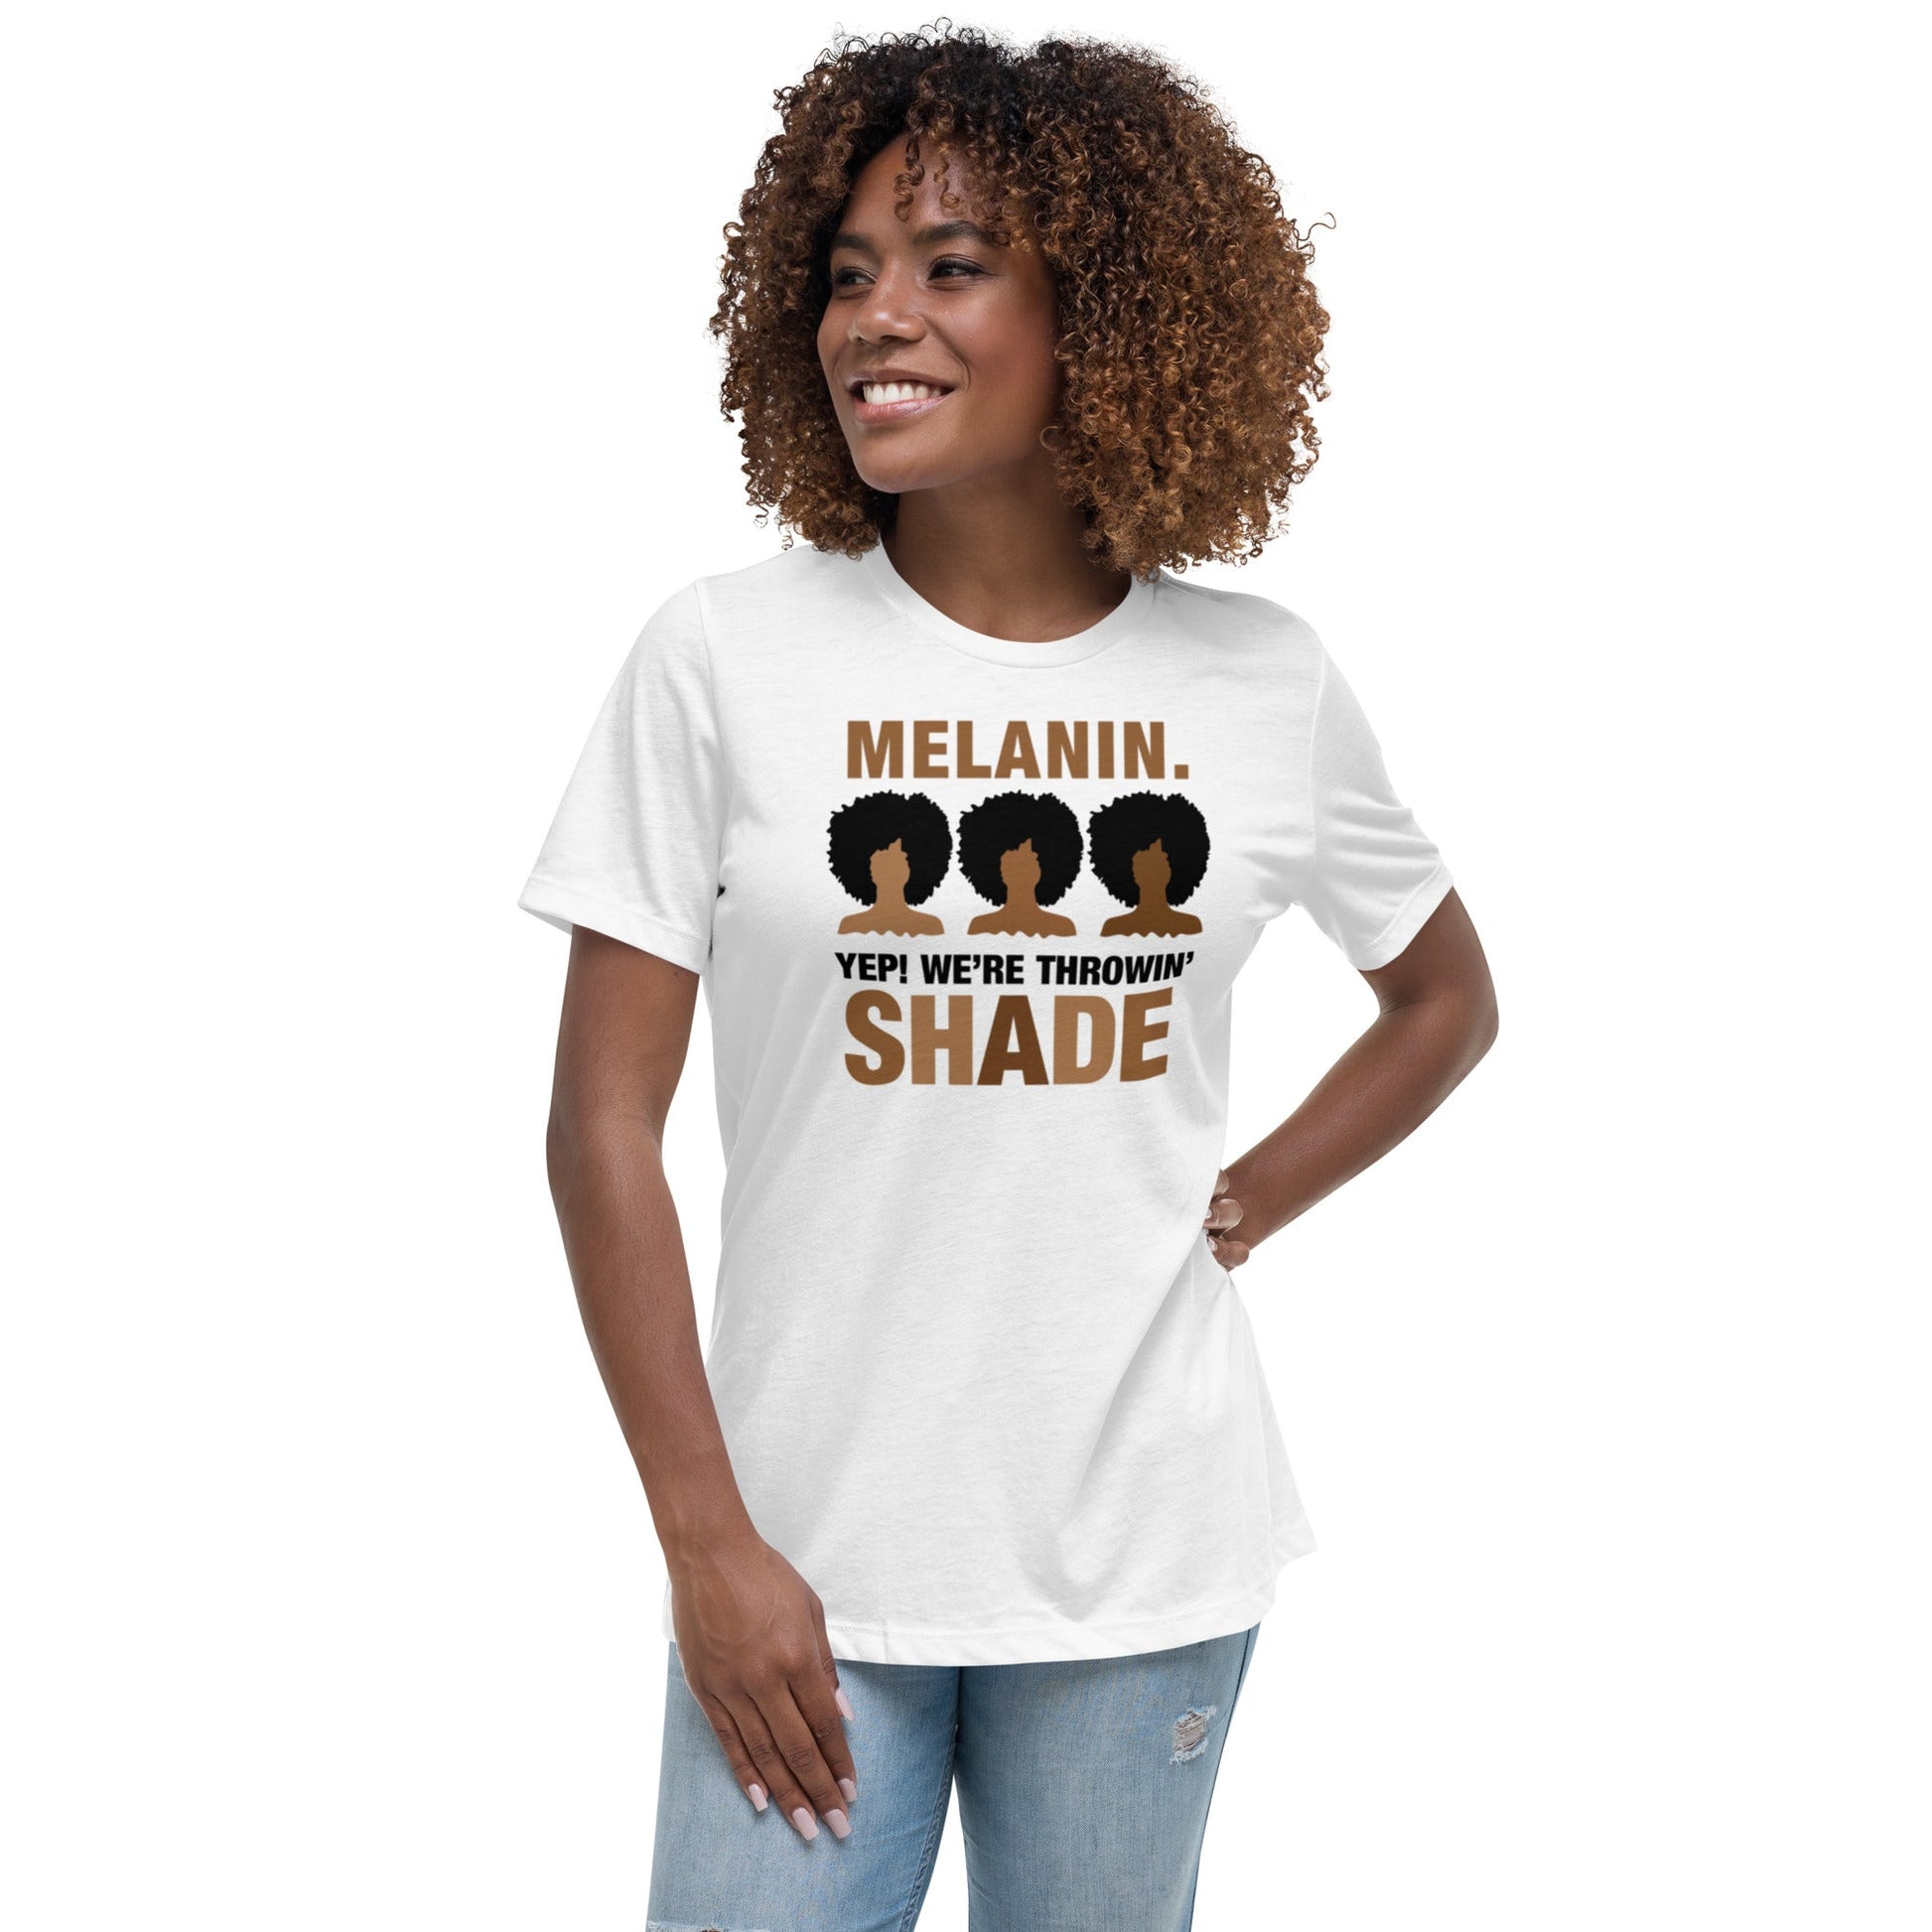 Melanin. Yep! We're Throwing Shade Women's Relaxed T-Shirt Women's Relaxed T-Shirt - Catch This Tea Shirts